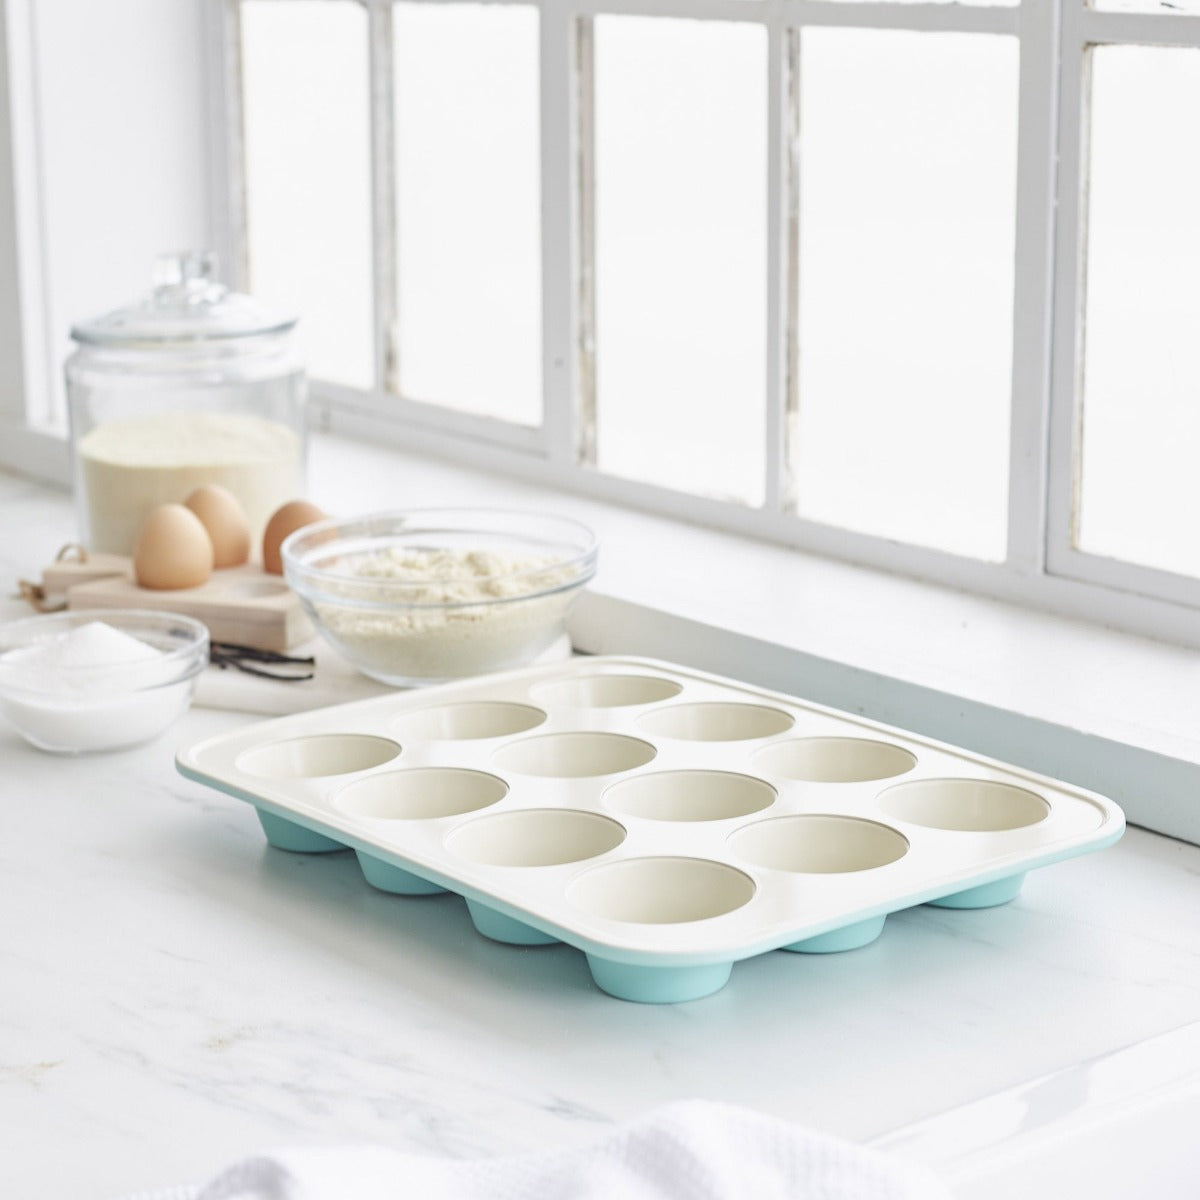 GreenLife Ceramic Nonstick 12-Piece Bakeware Set